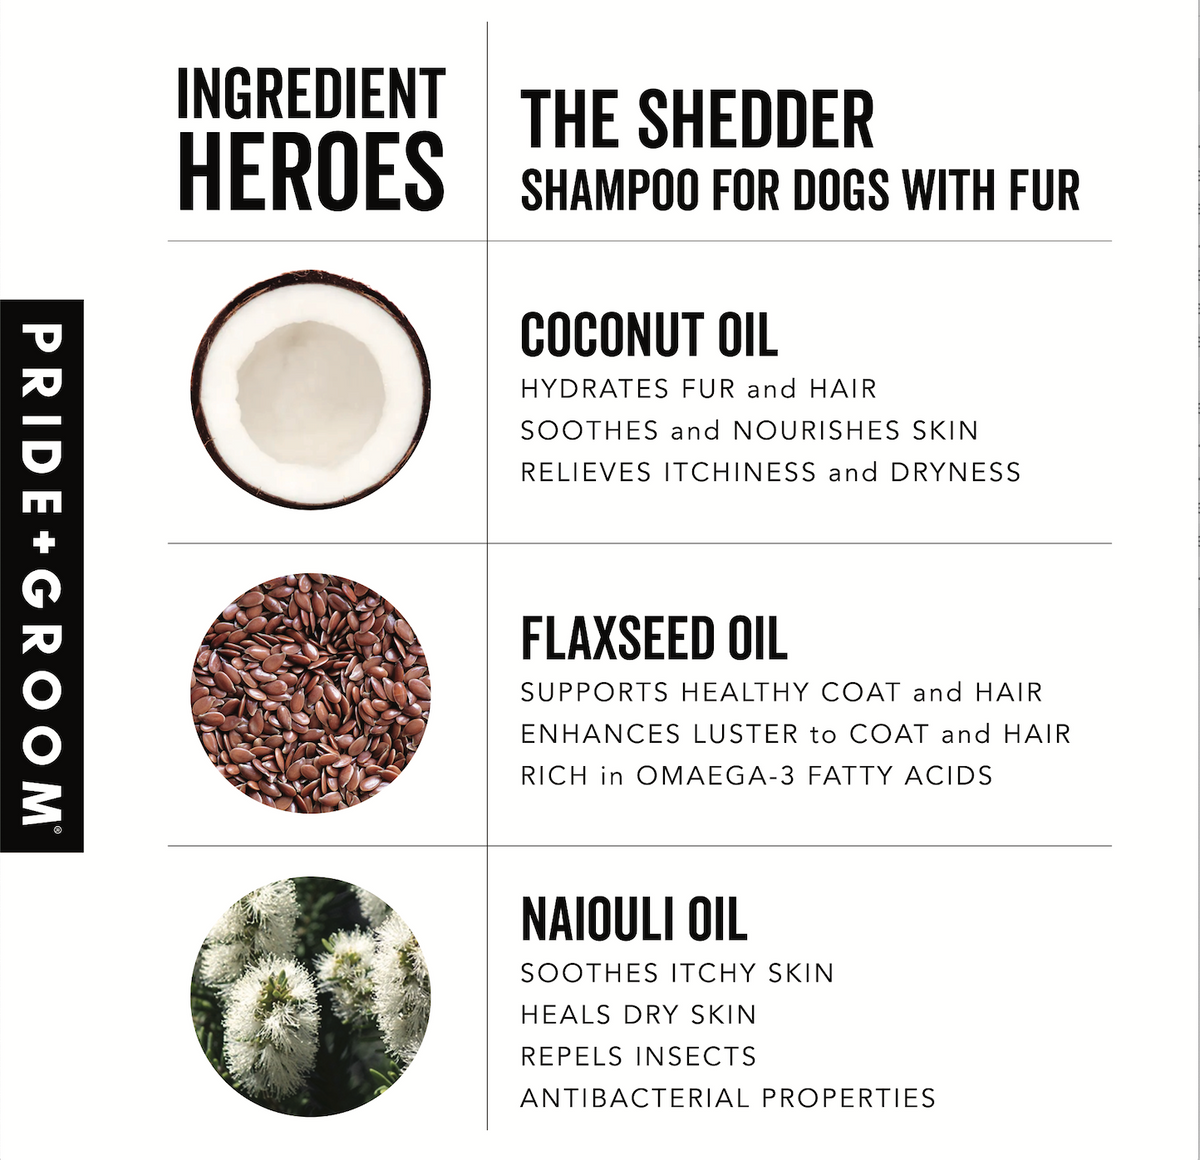 shedder shampoo for dogs in bulk, shedding dog shampoo wholesale, professional dog shampoo for groomers, coat specific dog shampoo in bulk, 16oz, ingredients